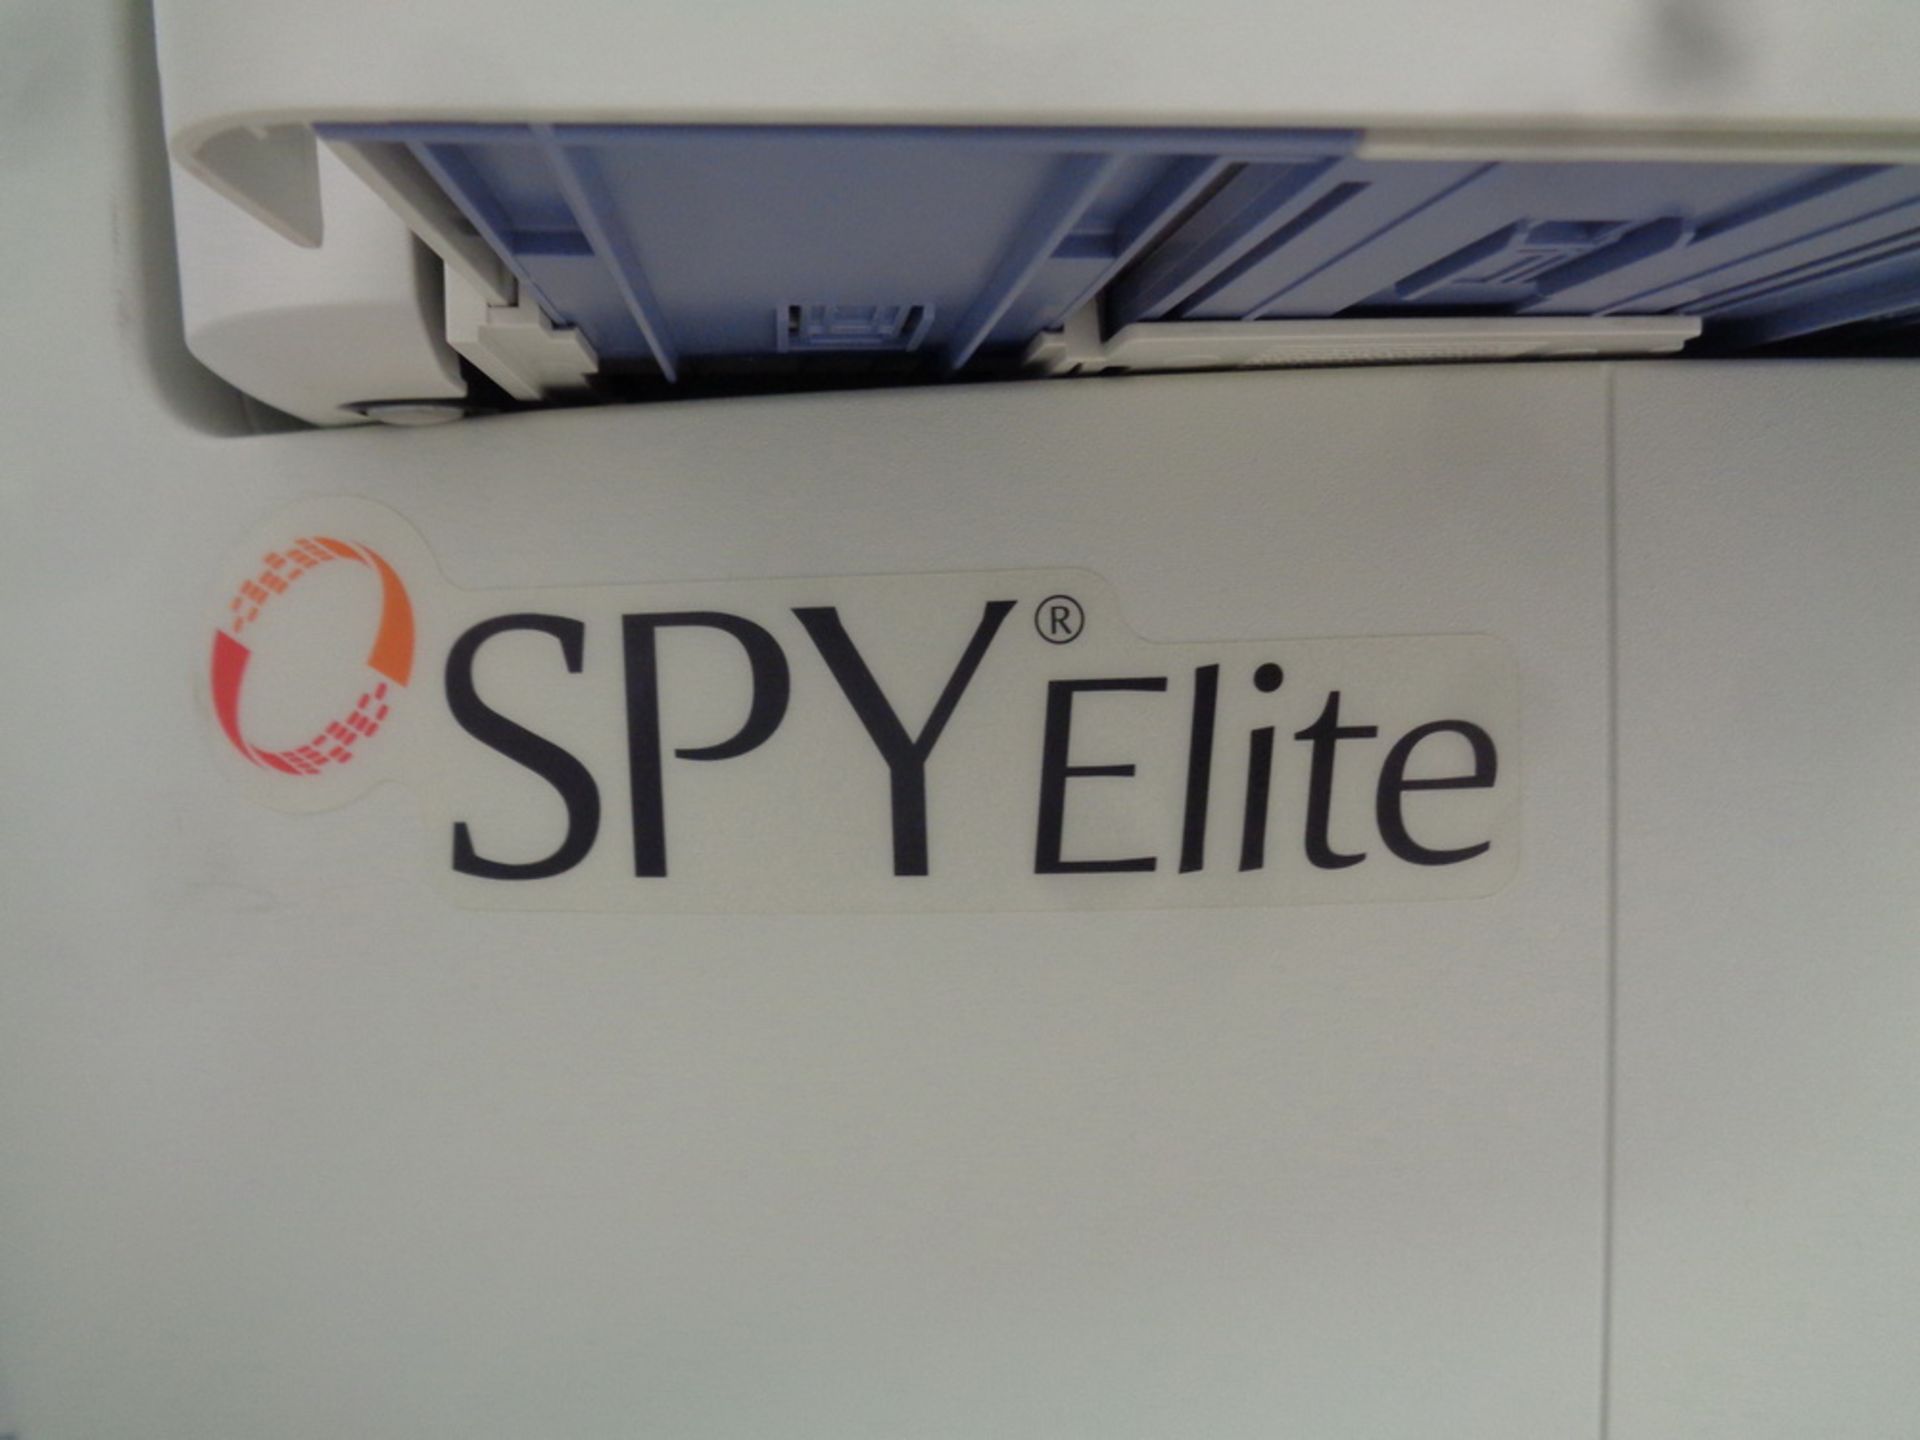 Stryker NOVADAQ SPY Elite Florescence Imaging Surgical Visualization System, Model LC3000 - Image 2 of 4